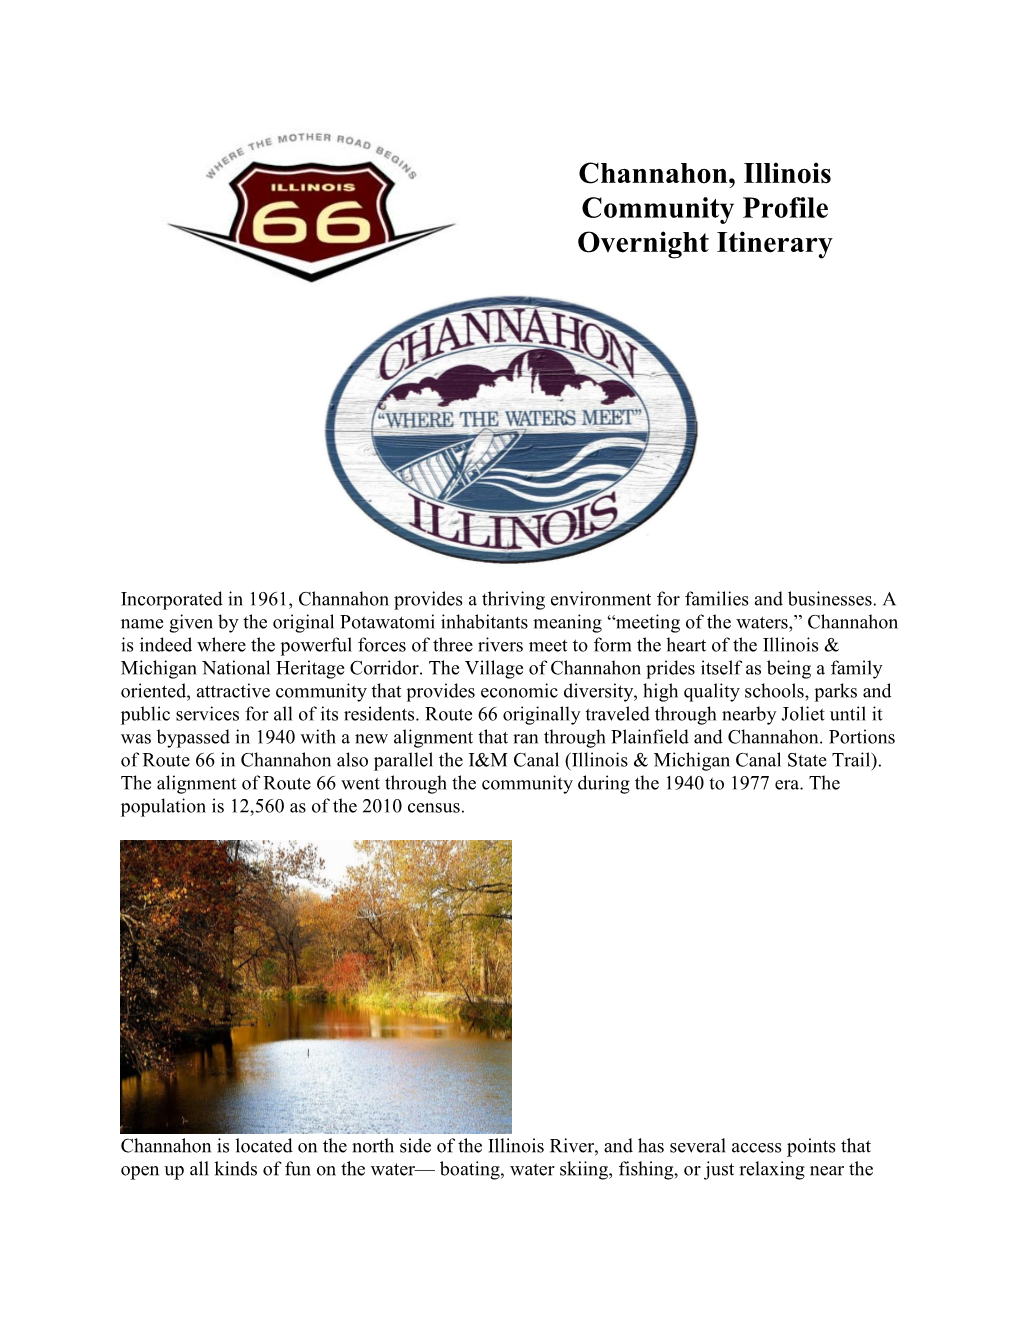 Channahon, Illinois Community Profile Overnight Itinerary